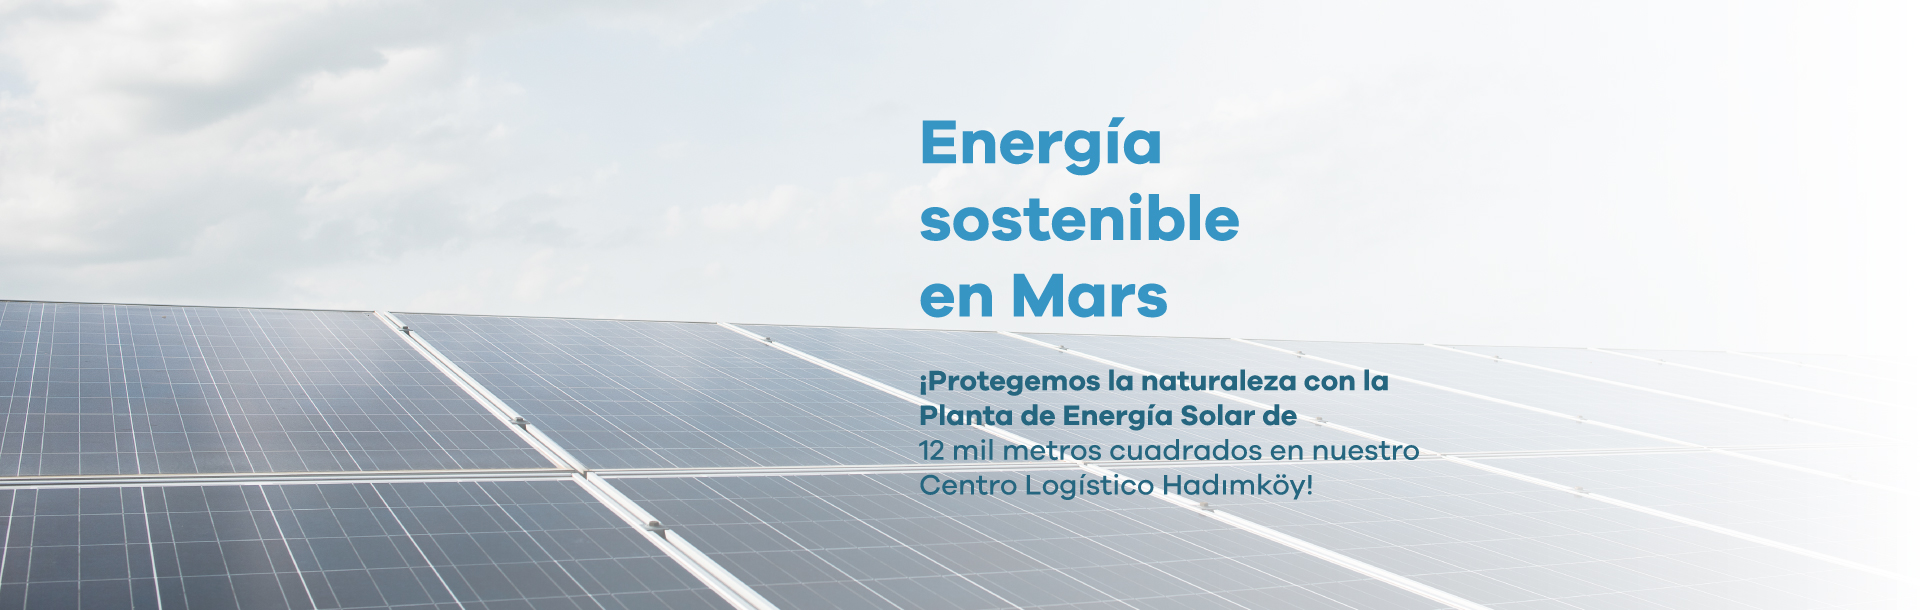 Energia sostenible en Mars